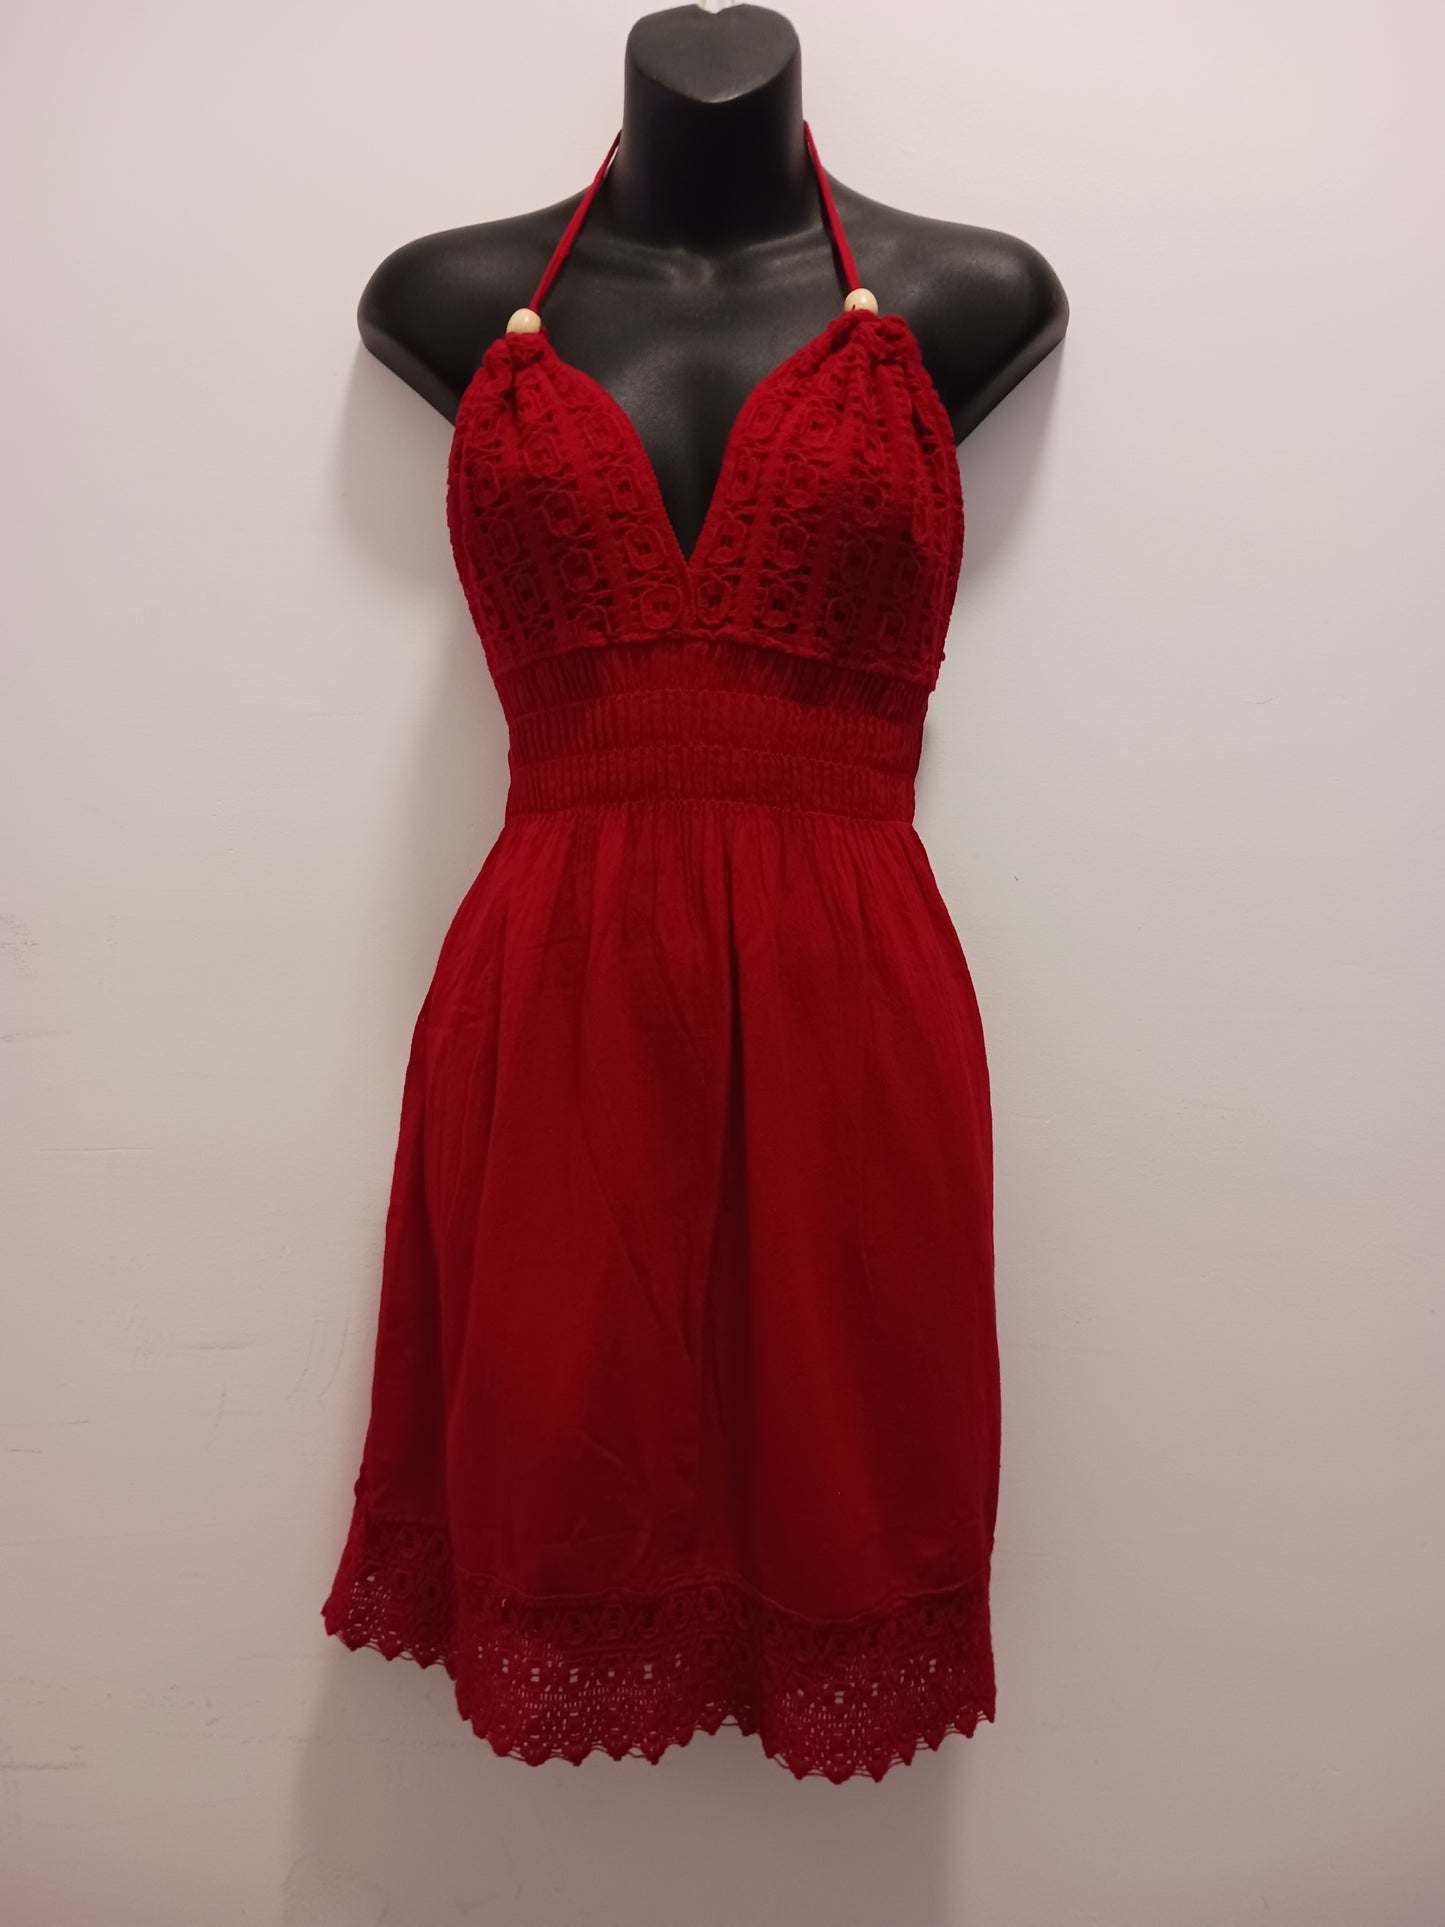 Cotton Collection Woman's Bead Halter Dress D203